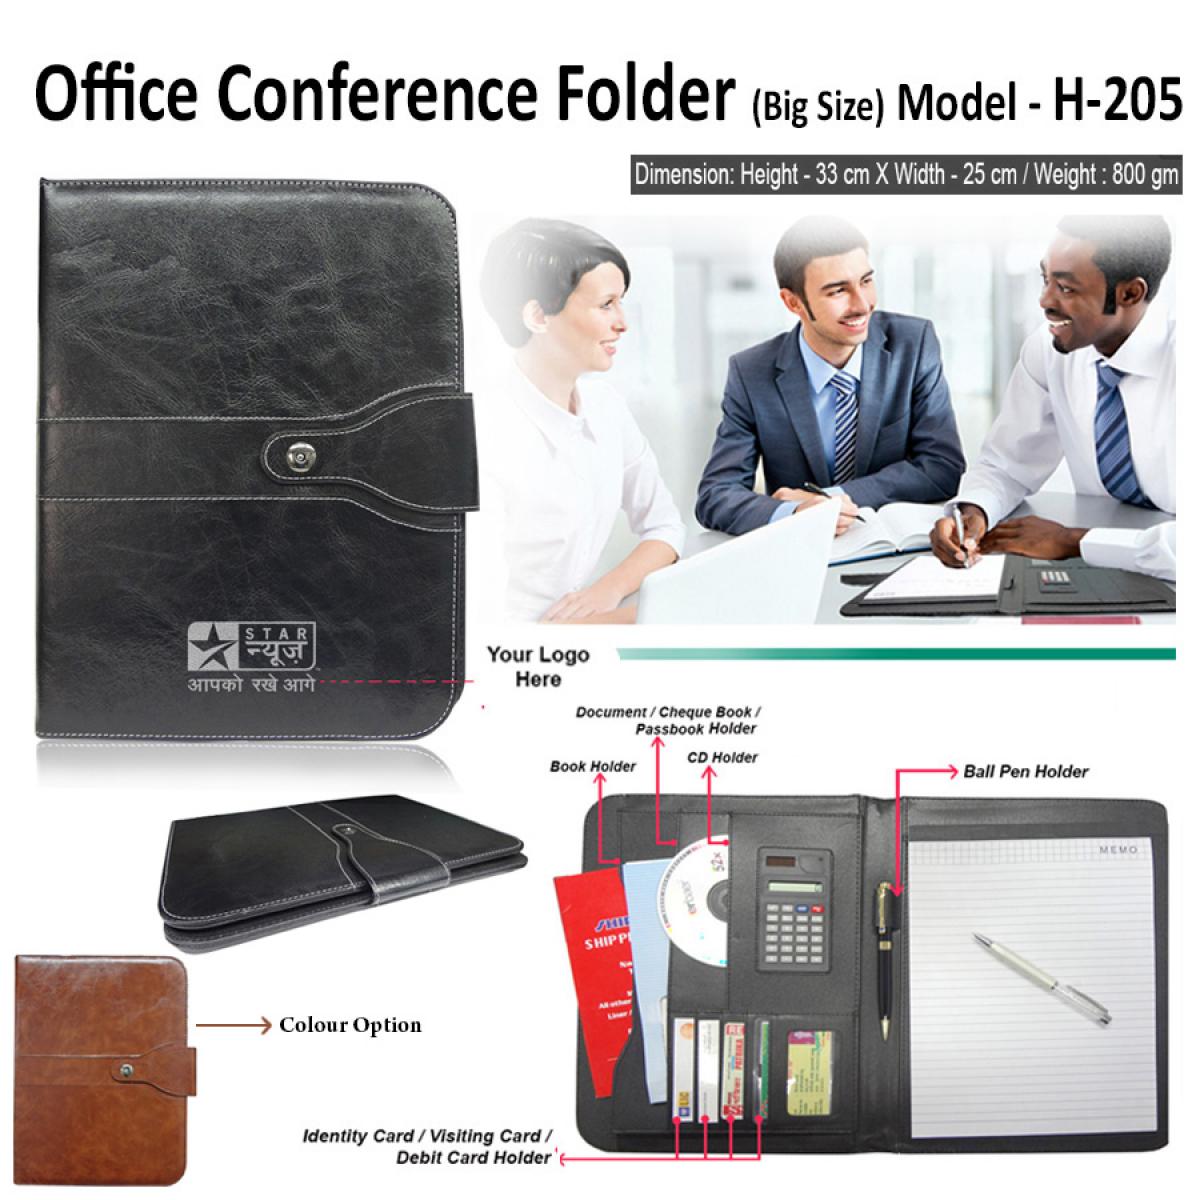 Office Conference Folder